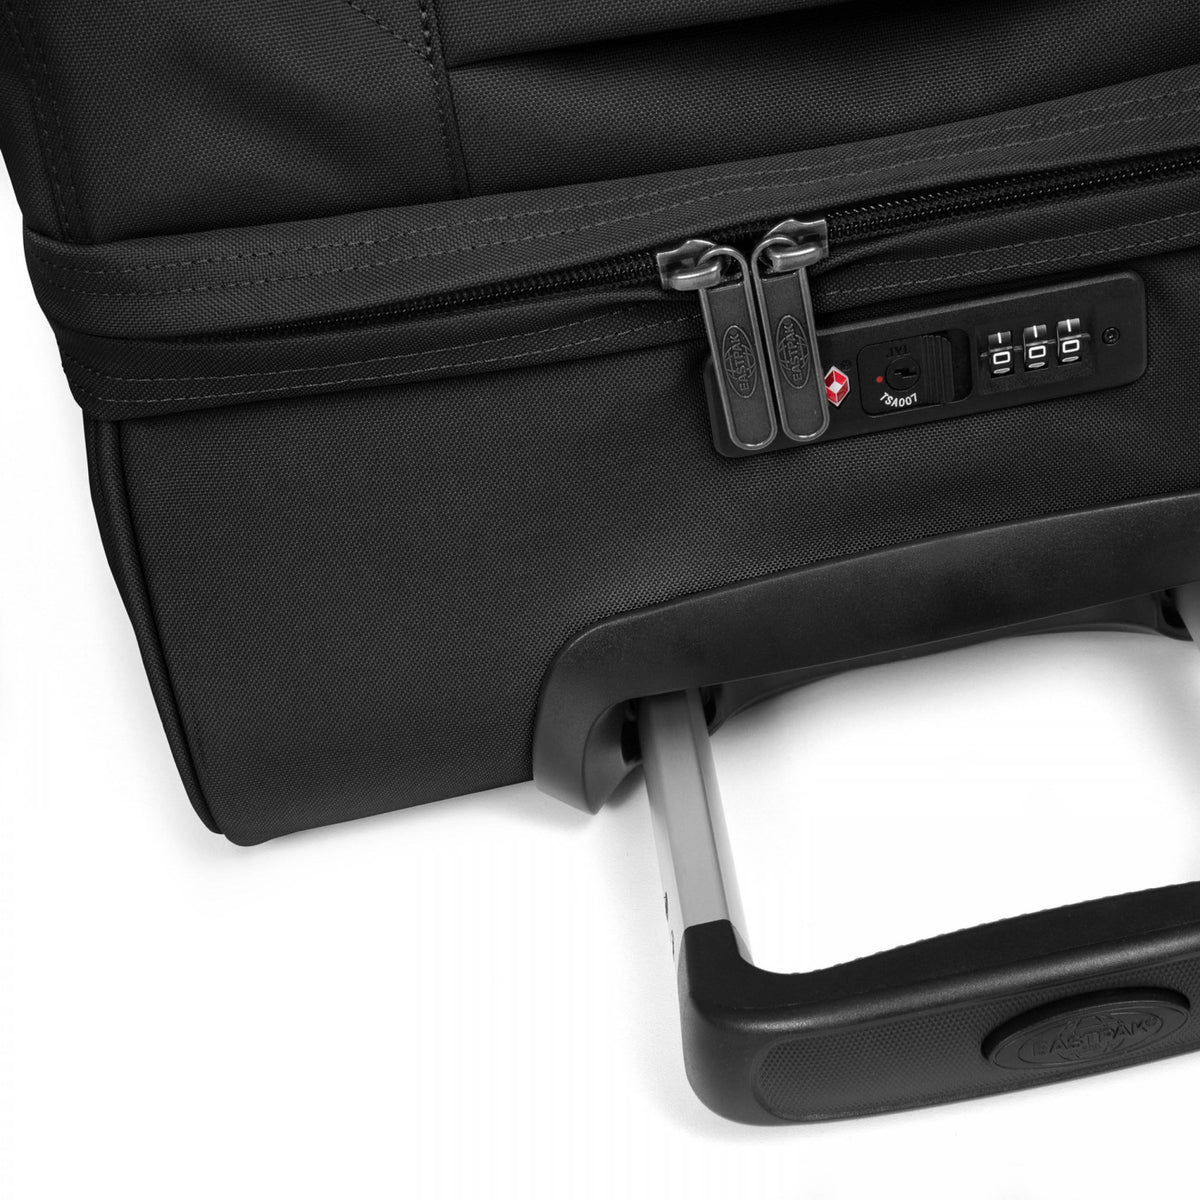 Eastpak Transit'R M Suitcase - Black